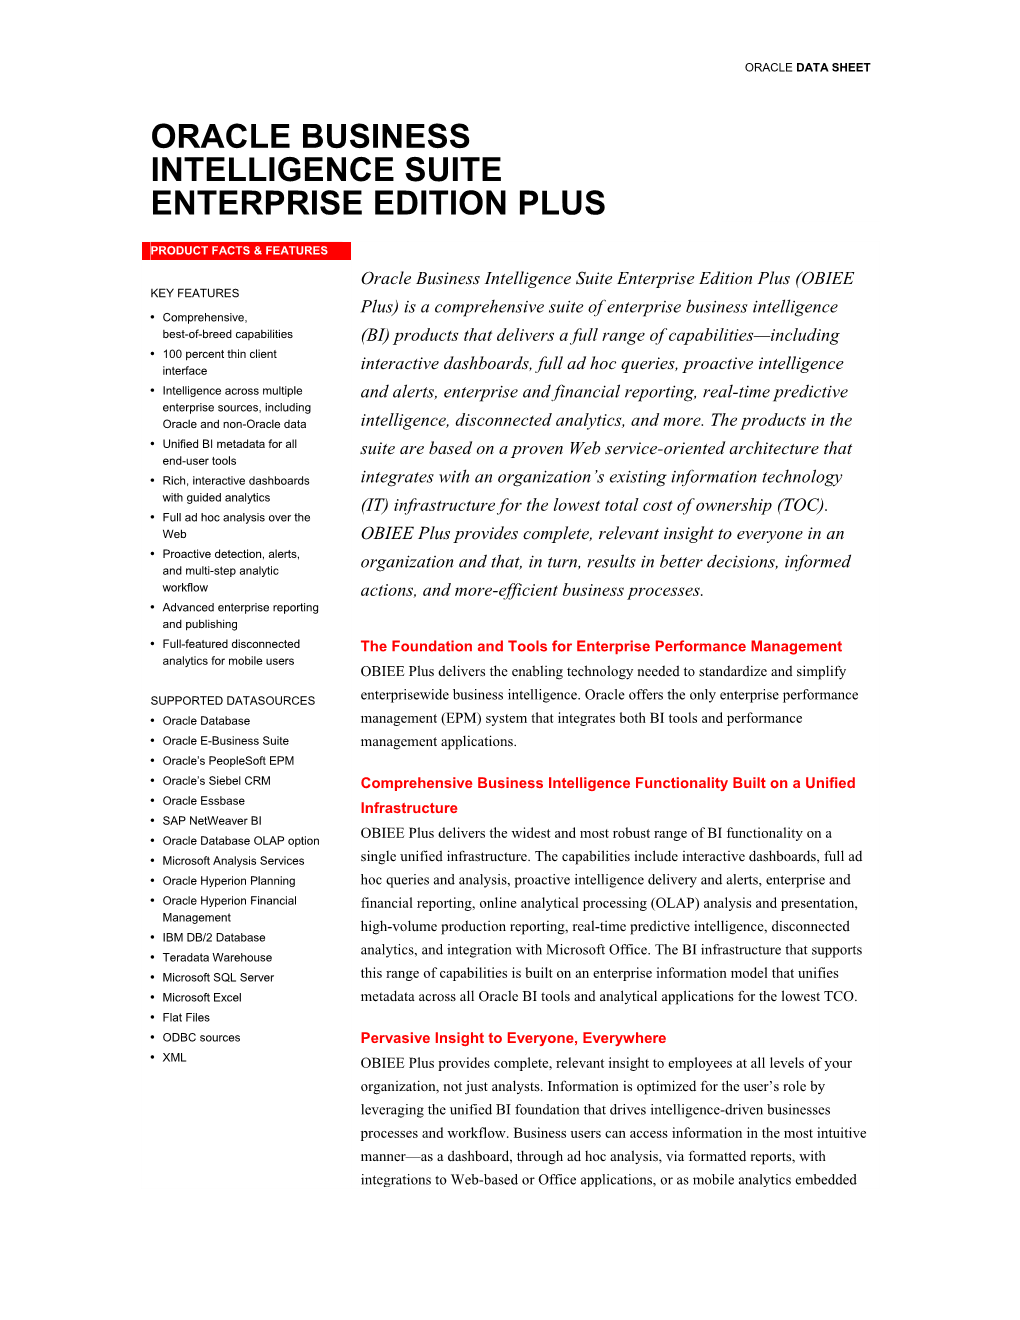 Oracle Business Intelligence Suite Enterprise Edition Plus Data Sheet